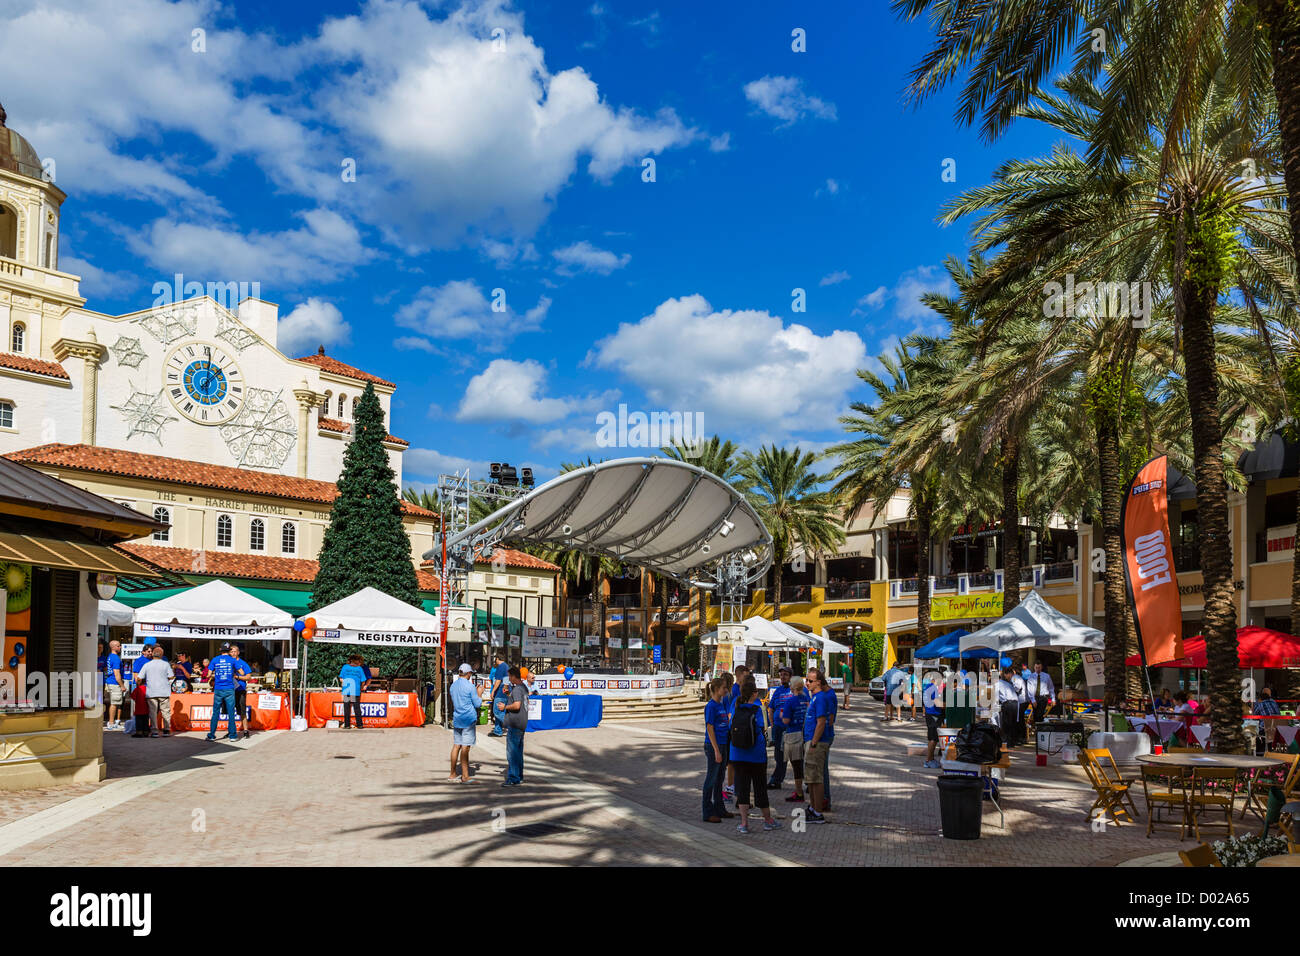 Cityplace development, South Rosemary Avenue, West Palm Beach, Treasure Coast, Florida, USA Stock Photo